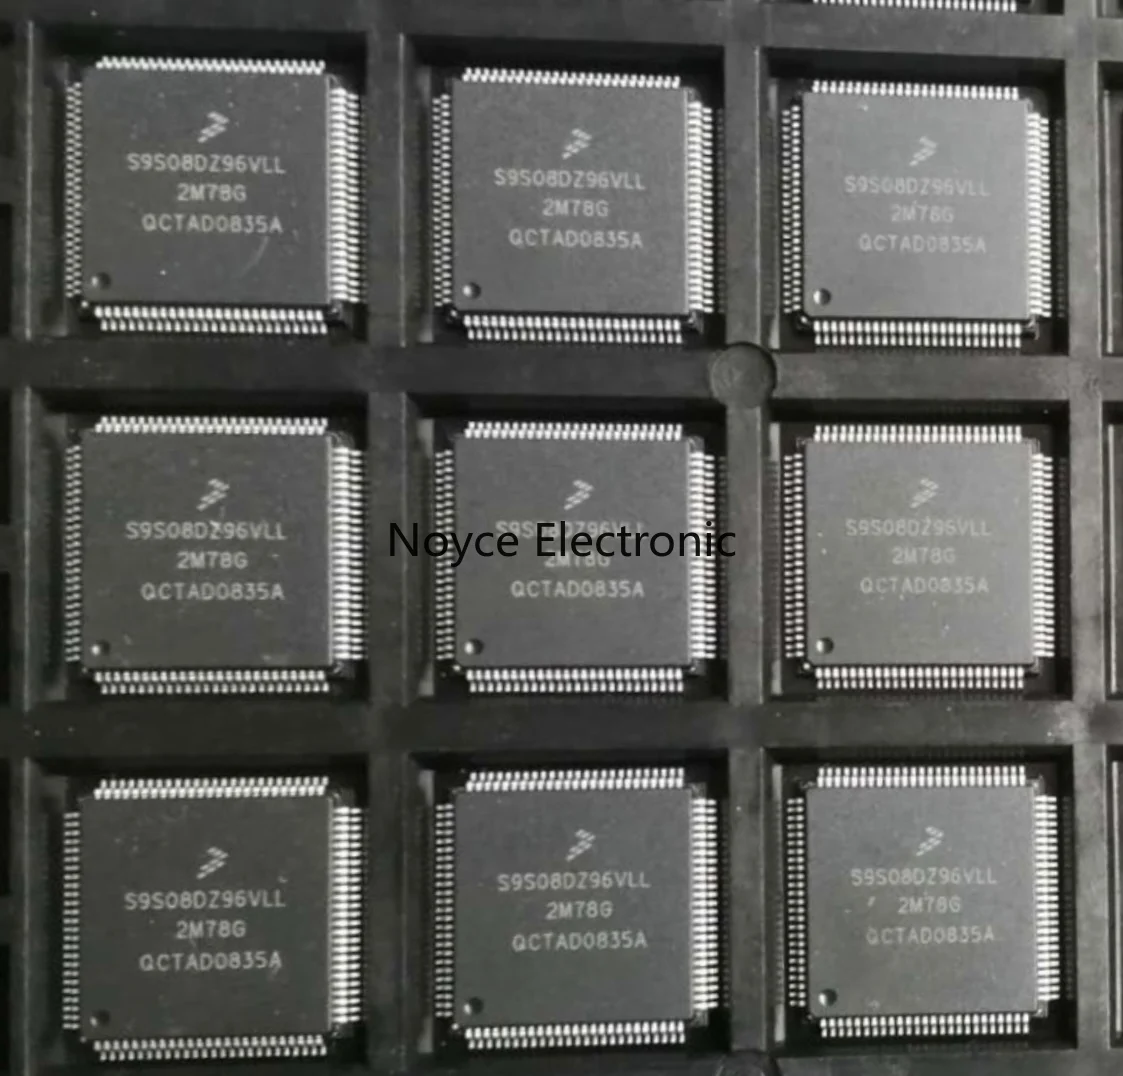 1pcs/S9S08DZ96 new original genuine spot S9S08DZ96VLL TQFP100 microcontroller chip stw77n65m5 5pcs lot 77n65m5 to 247 new original genuine spot one stop order